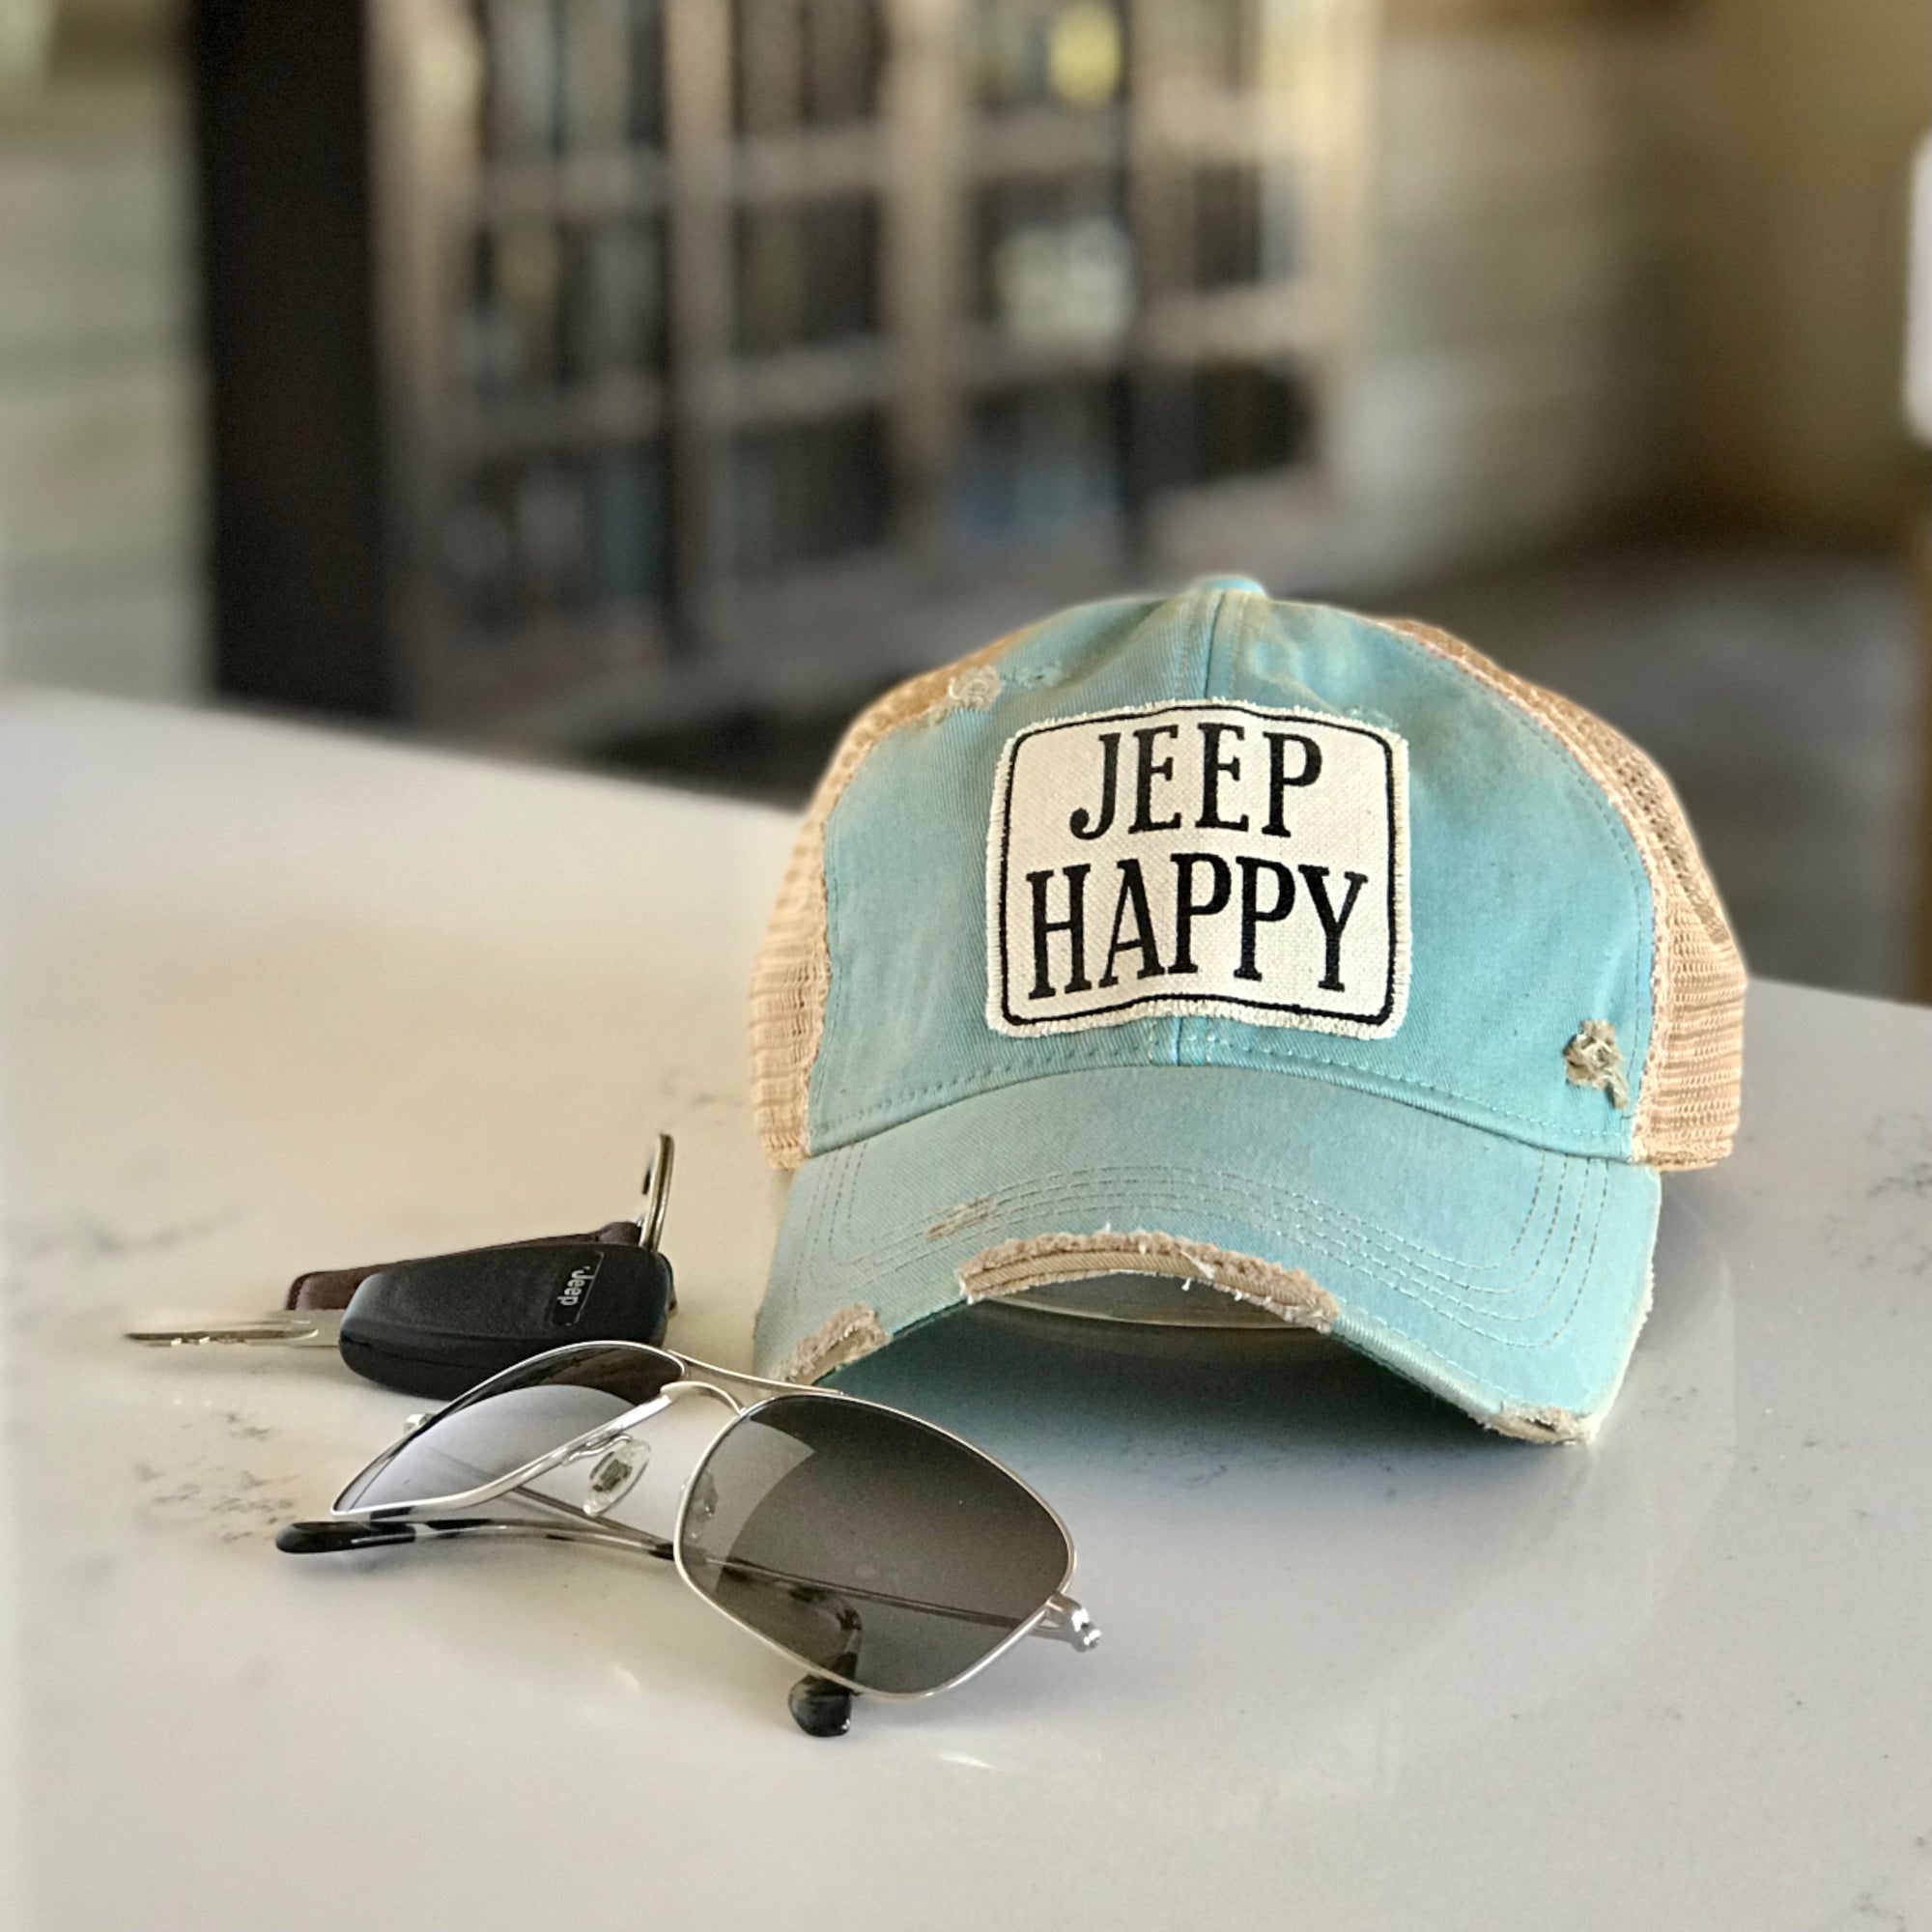 jeep happy